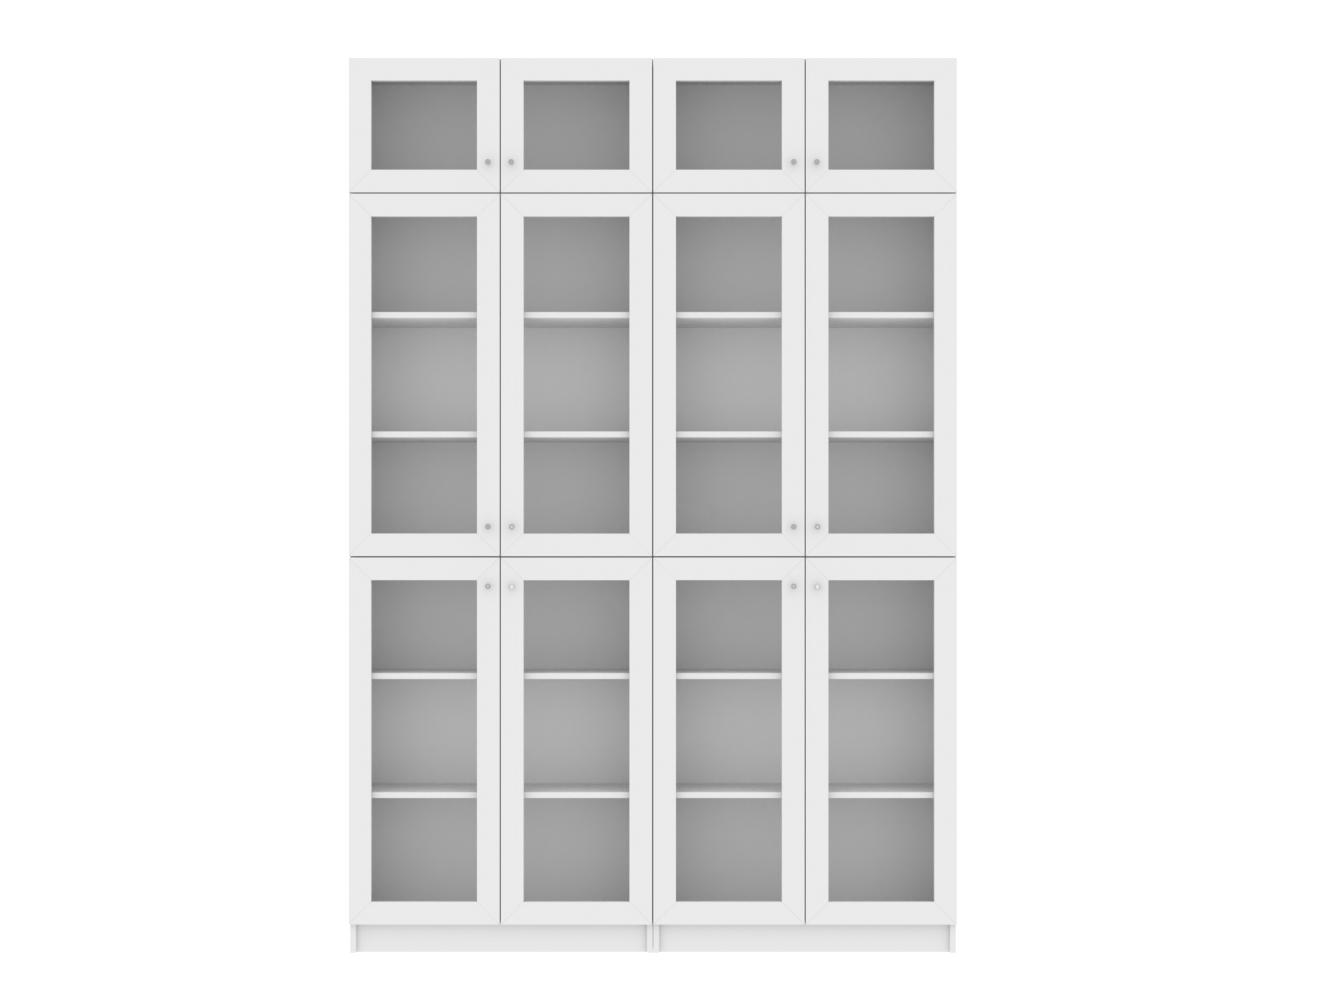  Книжный шкаф Билли 37 white ИКЕА (IKEA) изображение товара